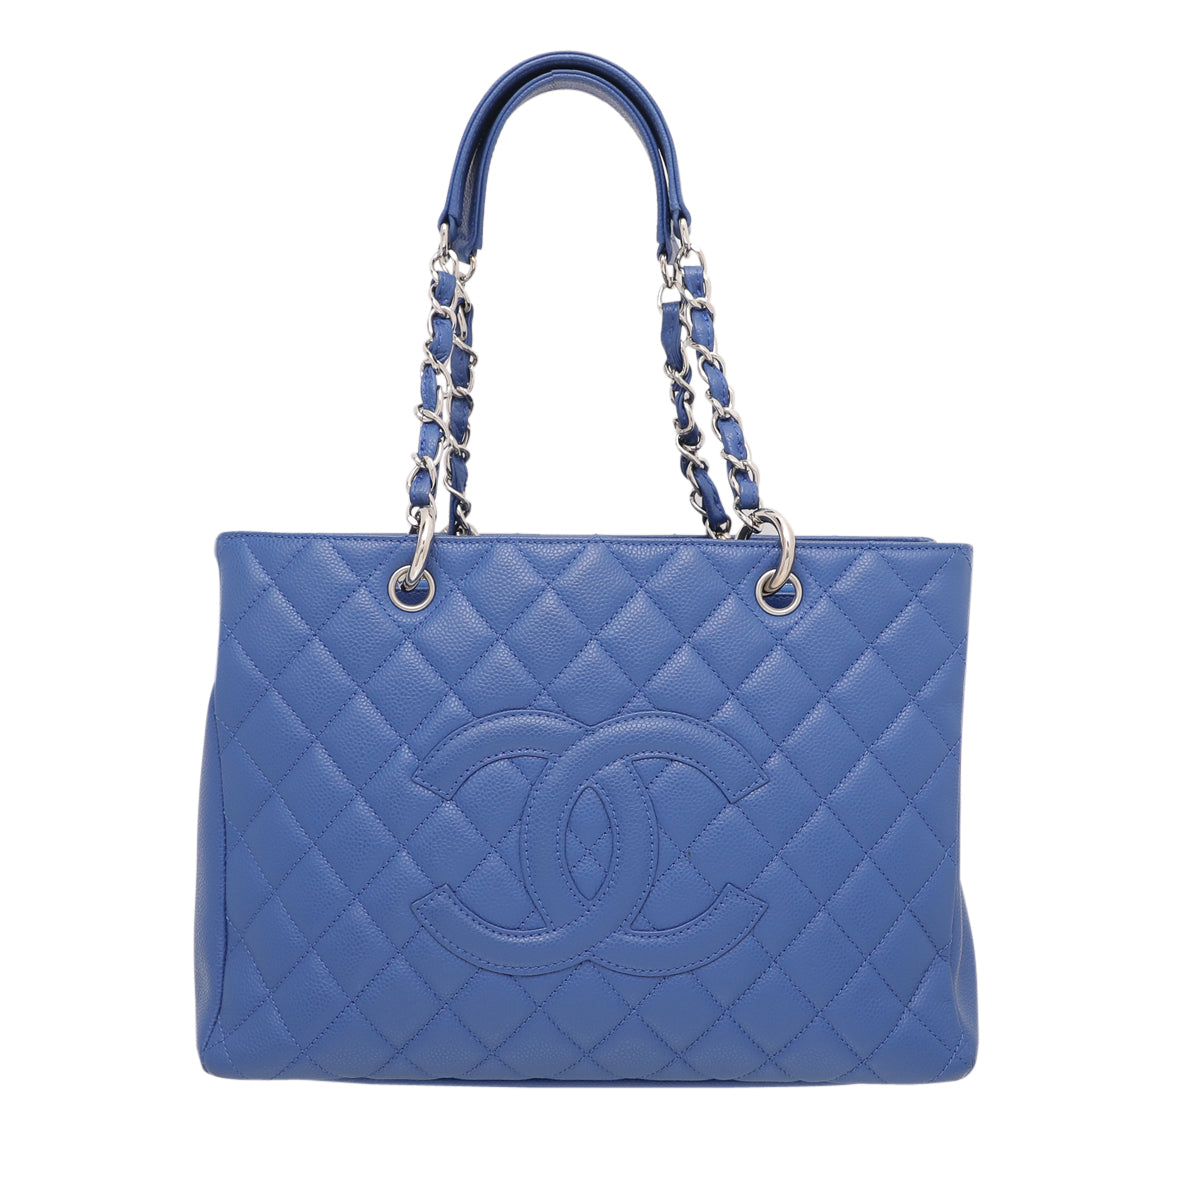 Chanel Royal Blue Grand Shopping Tote Old Version Bag